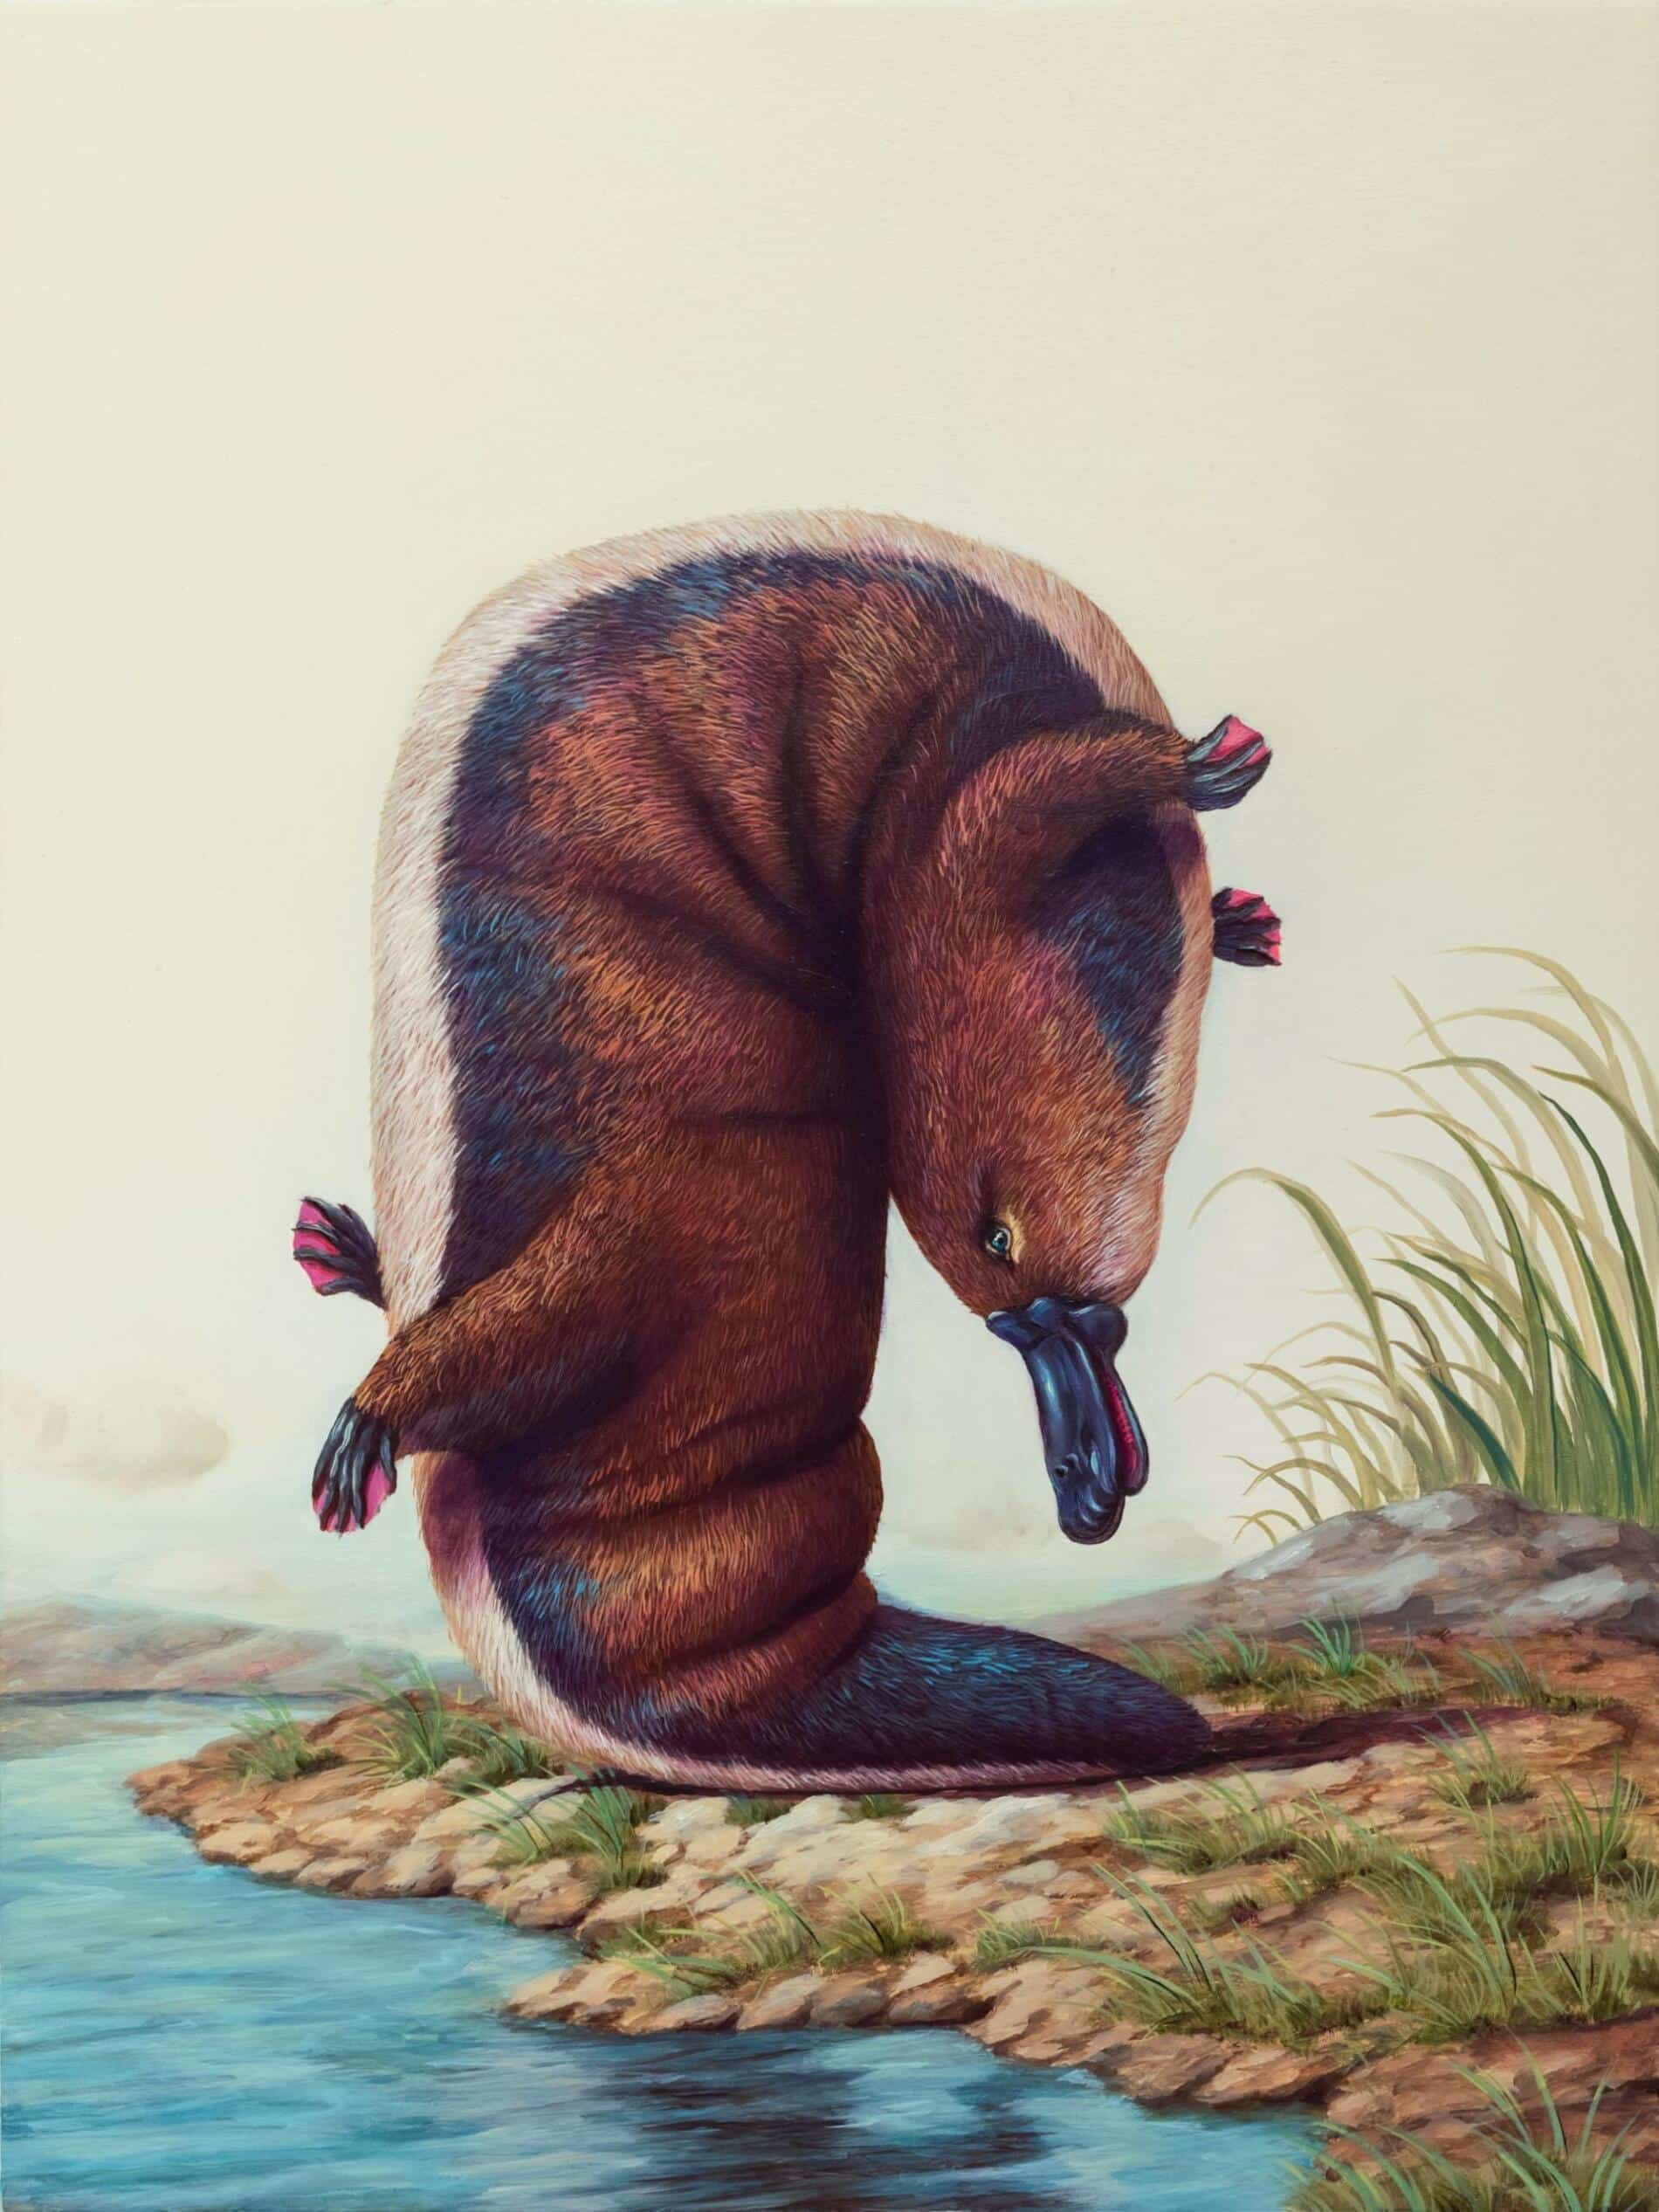 Bruno Pontiroli ointura surreal animales